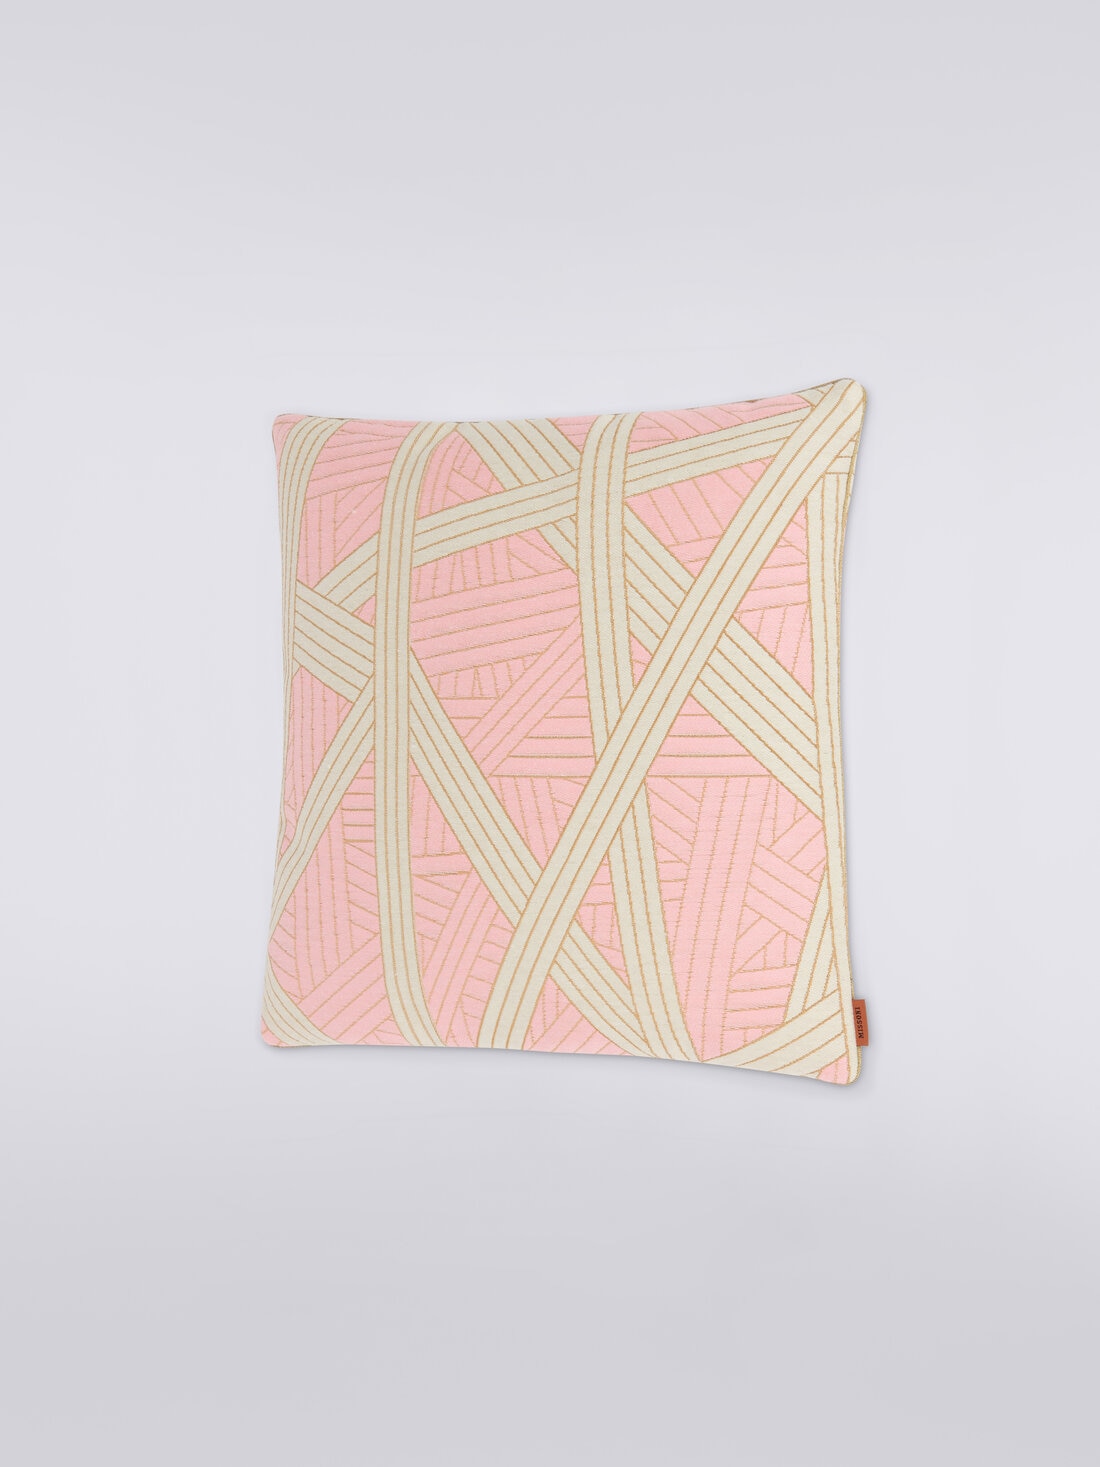 Nastri cushion 40x40 cm with stitching, Pink - 8051575830532 - 1